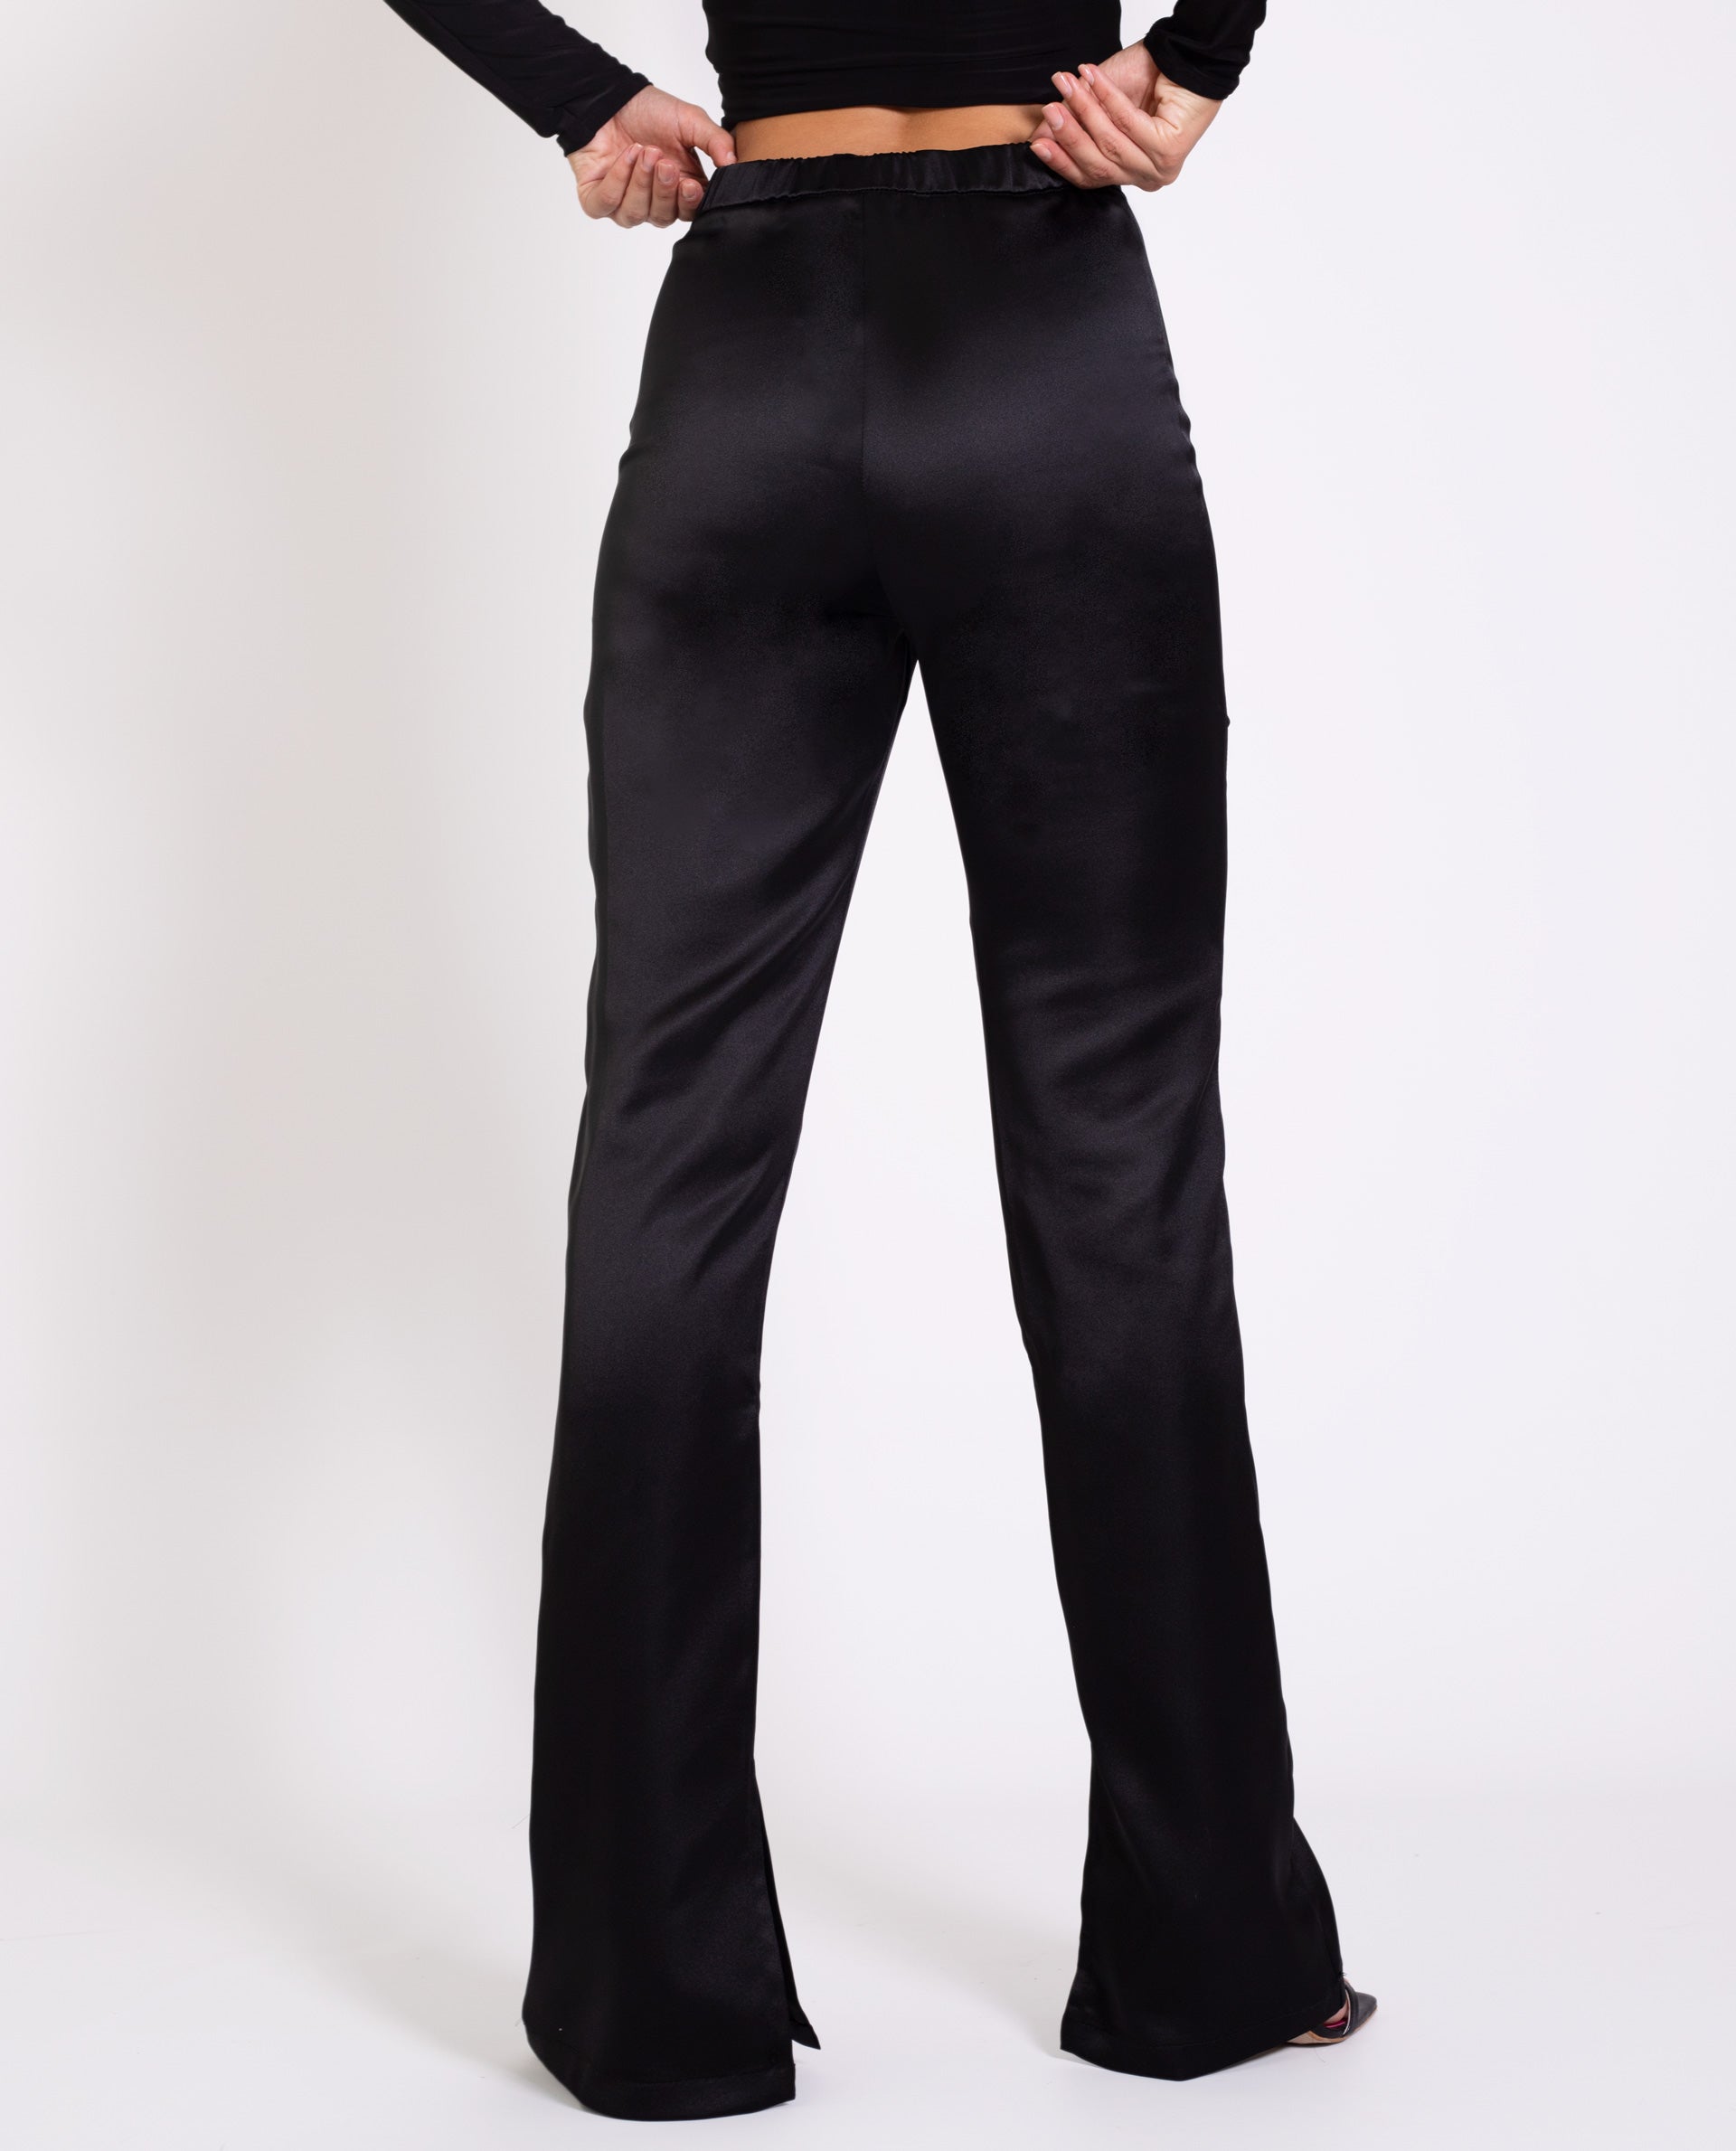 Pantalones padel mujer negro, Slazenger - Ariana